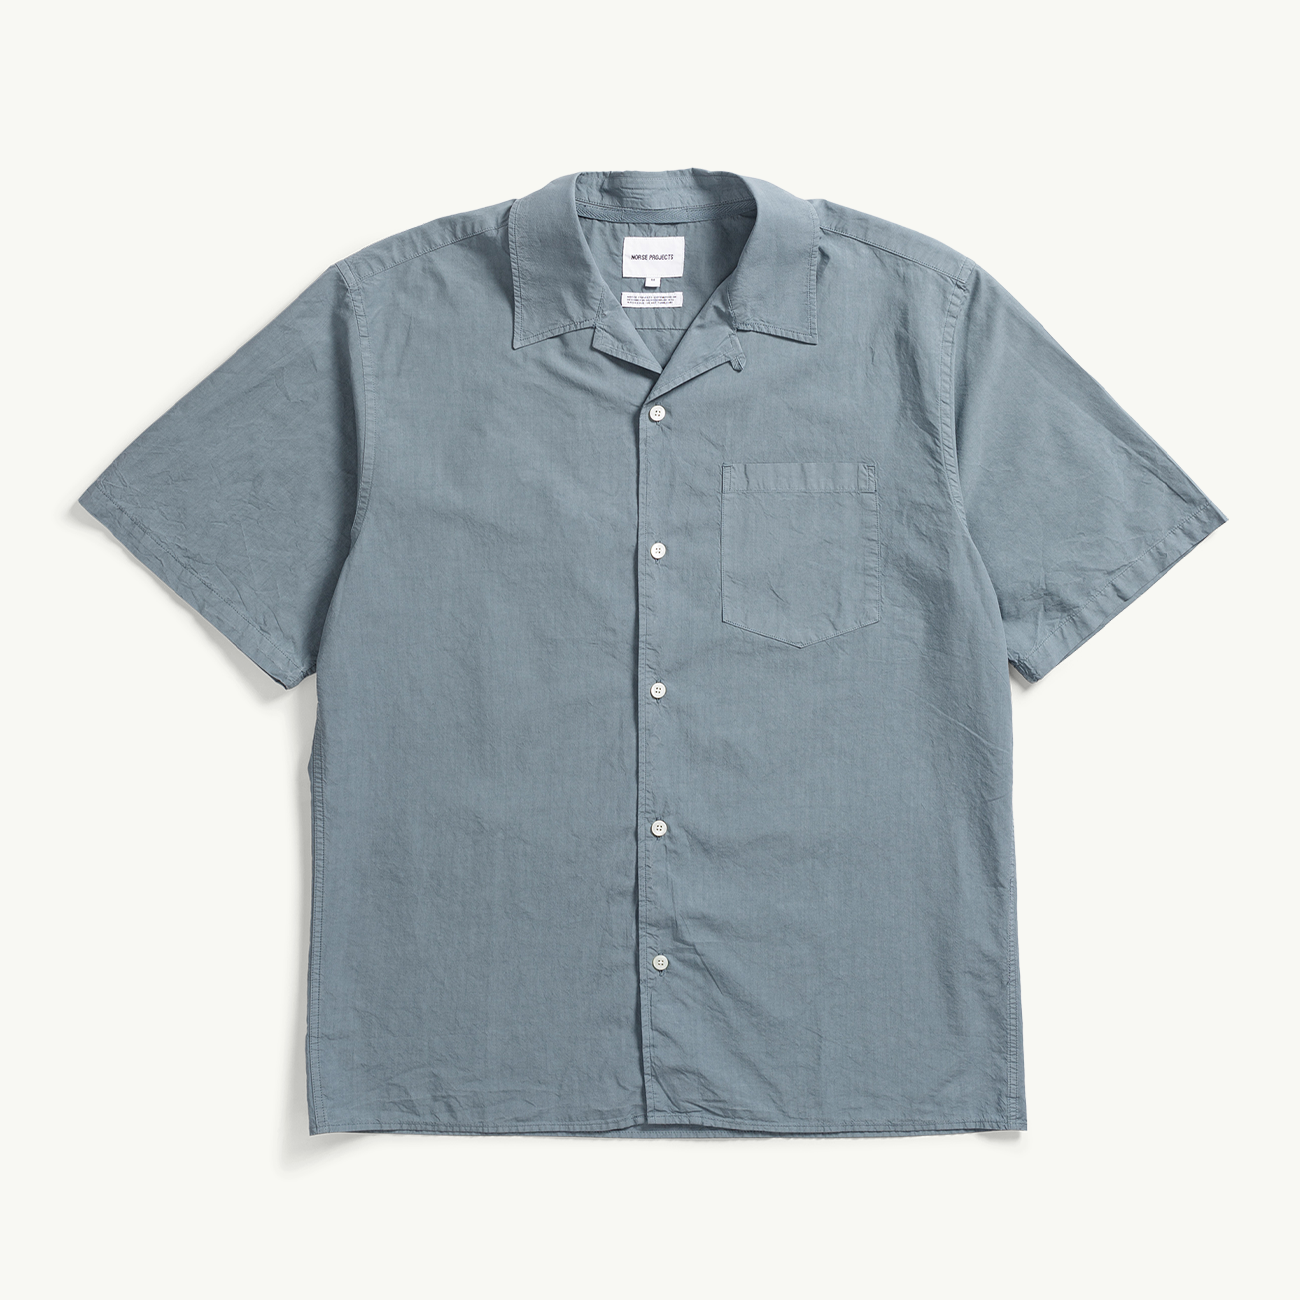 Carsten Cotton Tencel SS Shirt - Light Stone Blue